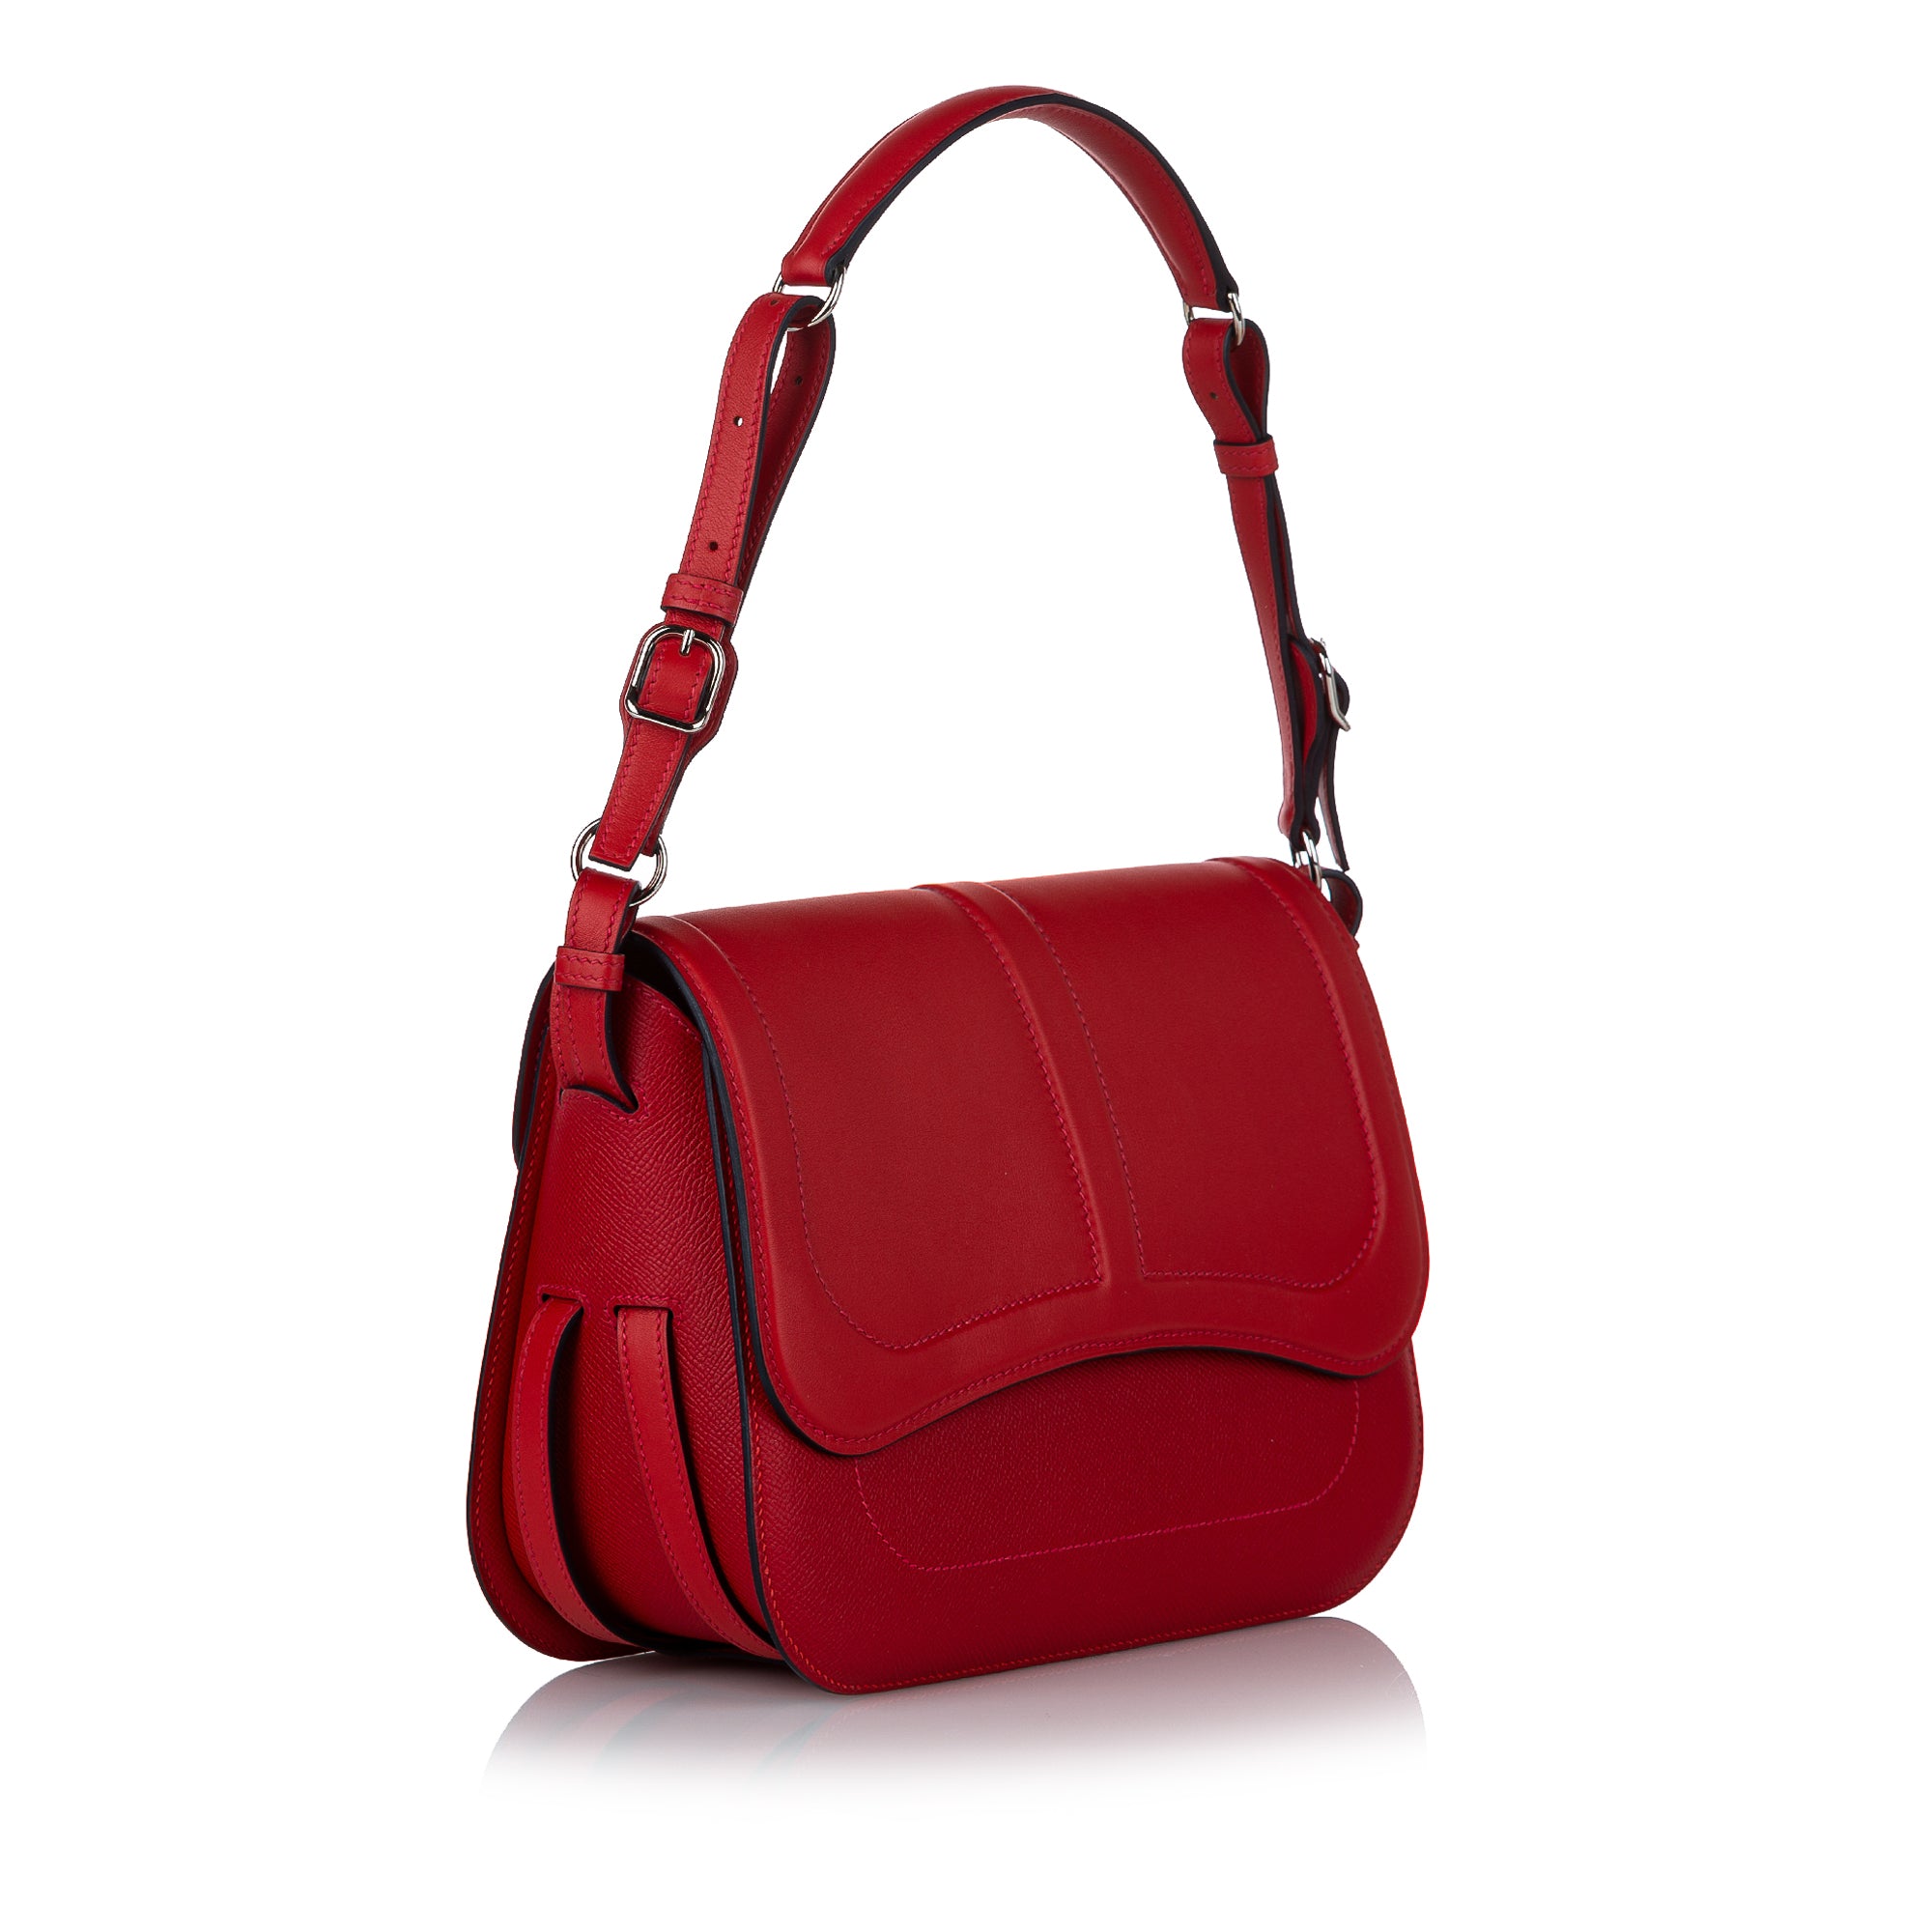 Hermès 1968 Pre-owned Birkin Handbag - Red